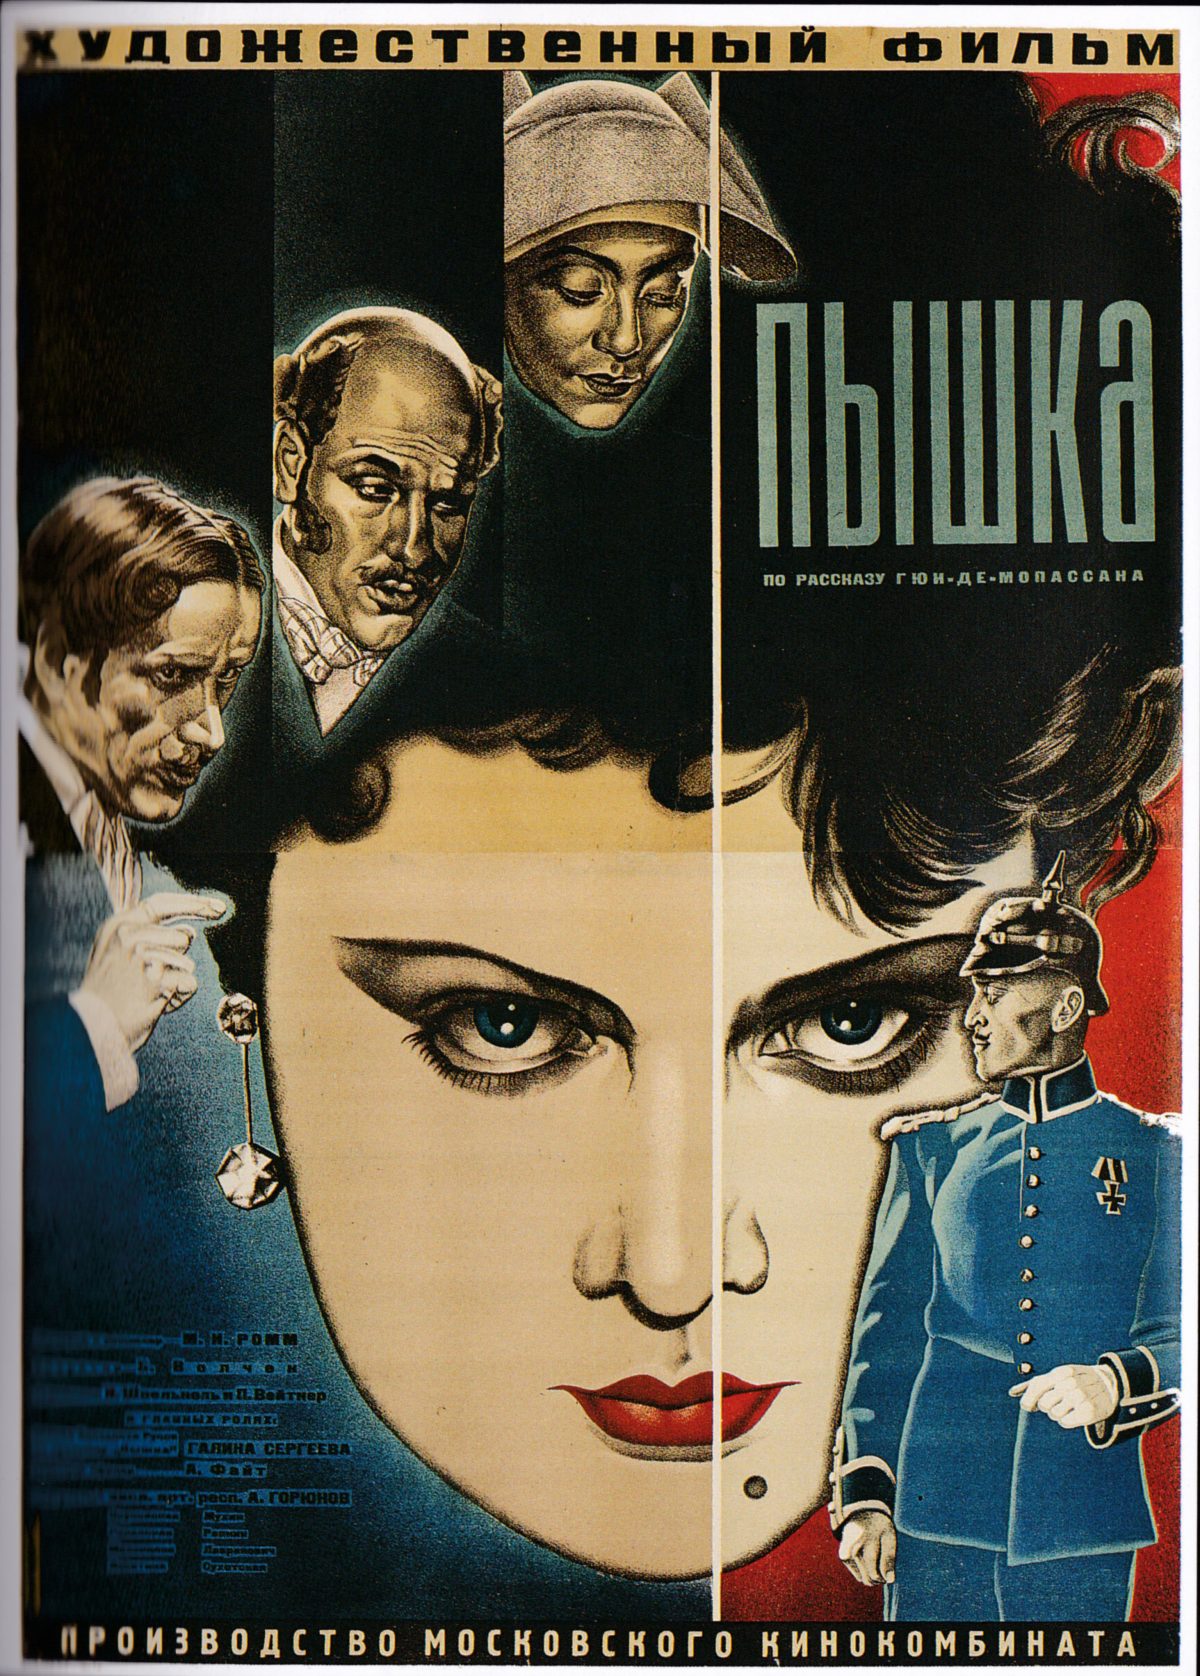 Soviet Union film poster